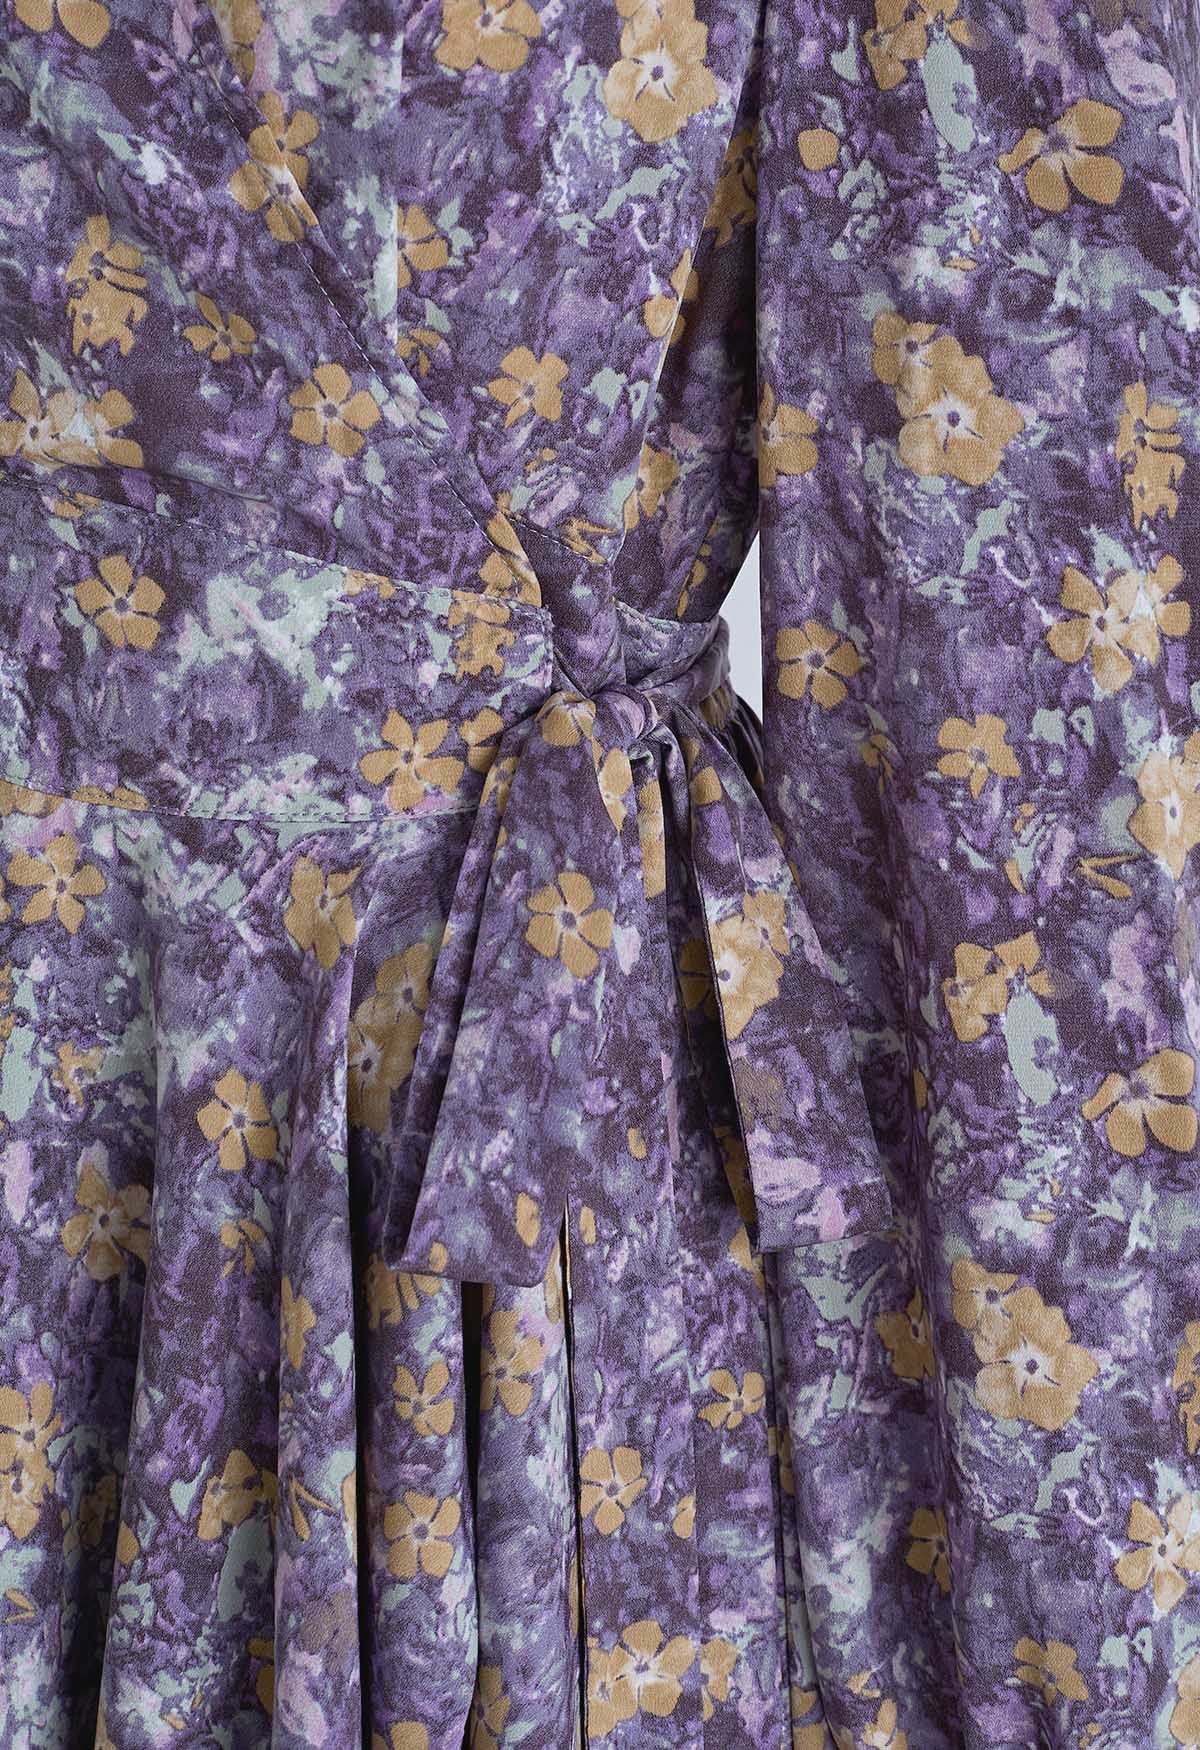 Floret Landscape Chiffon Wrap Mini Dress in Purple